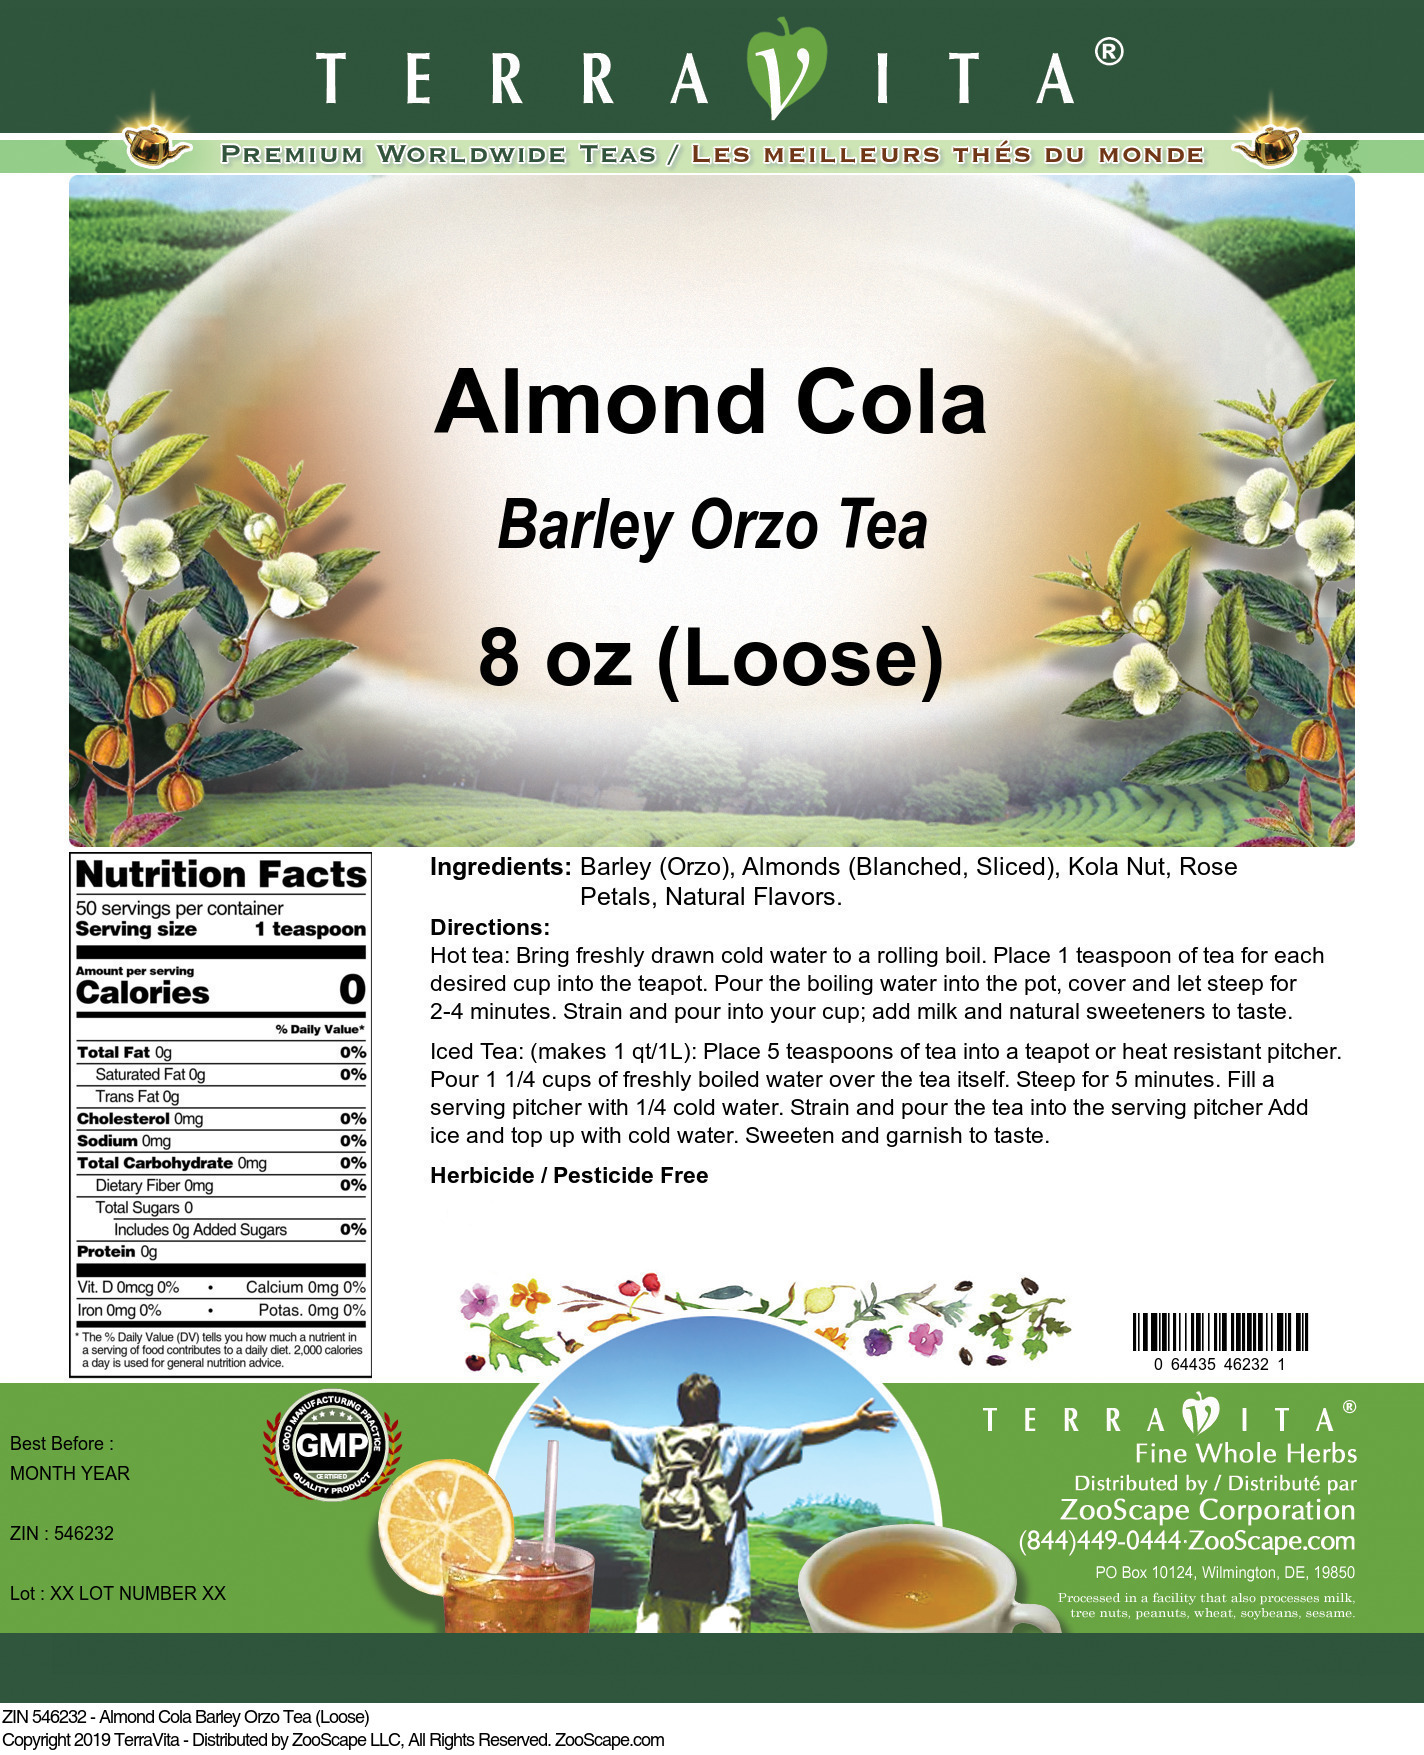 Almond Cola Barley Orzo Tea (Loose) - Label